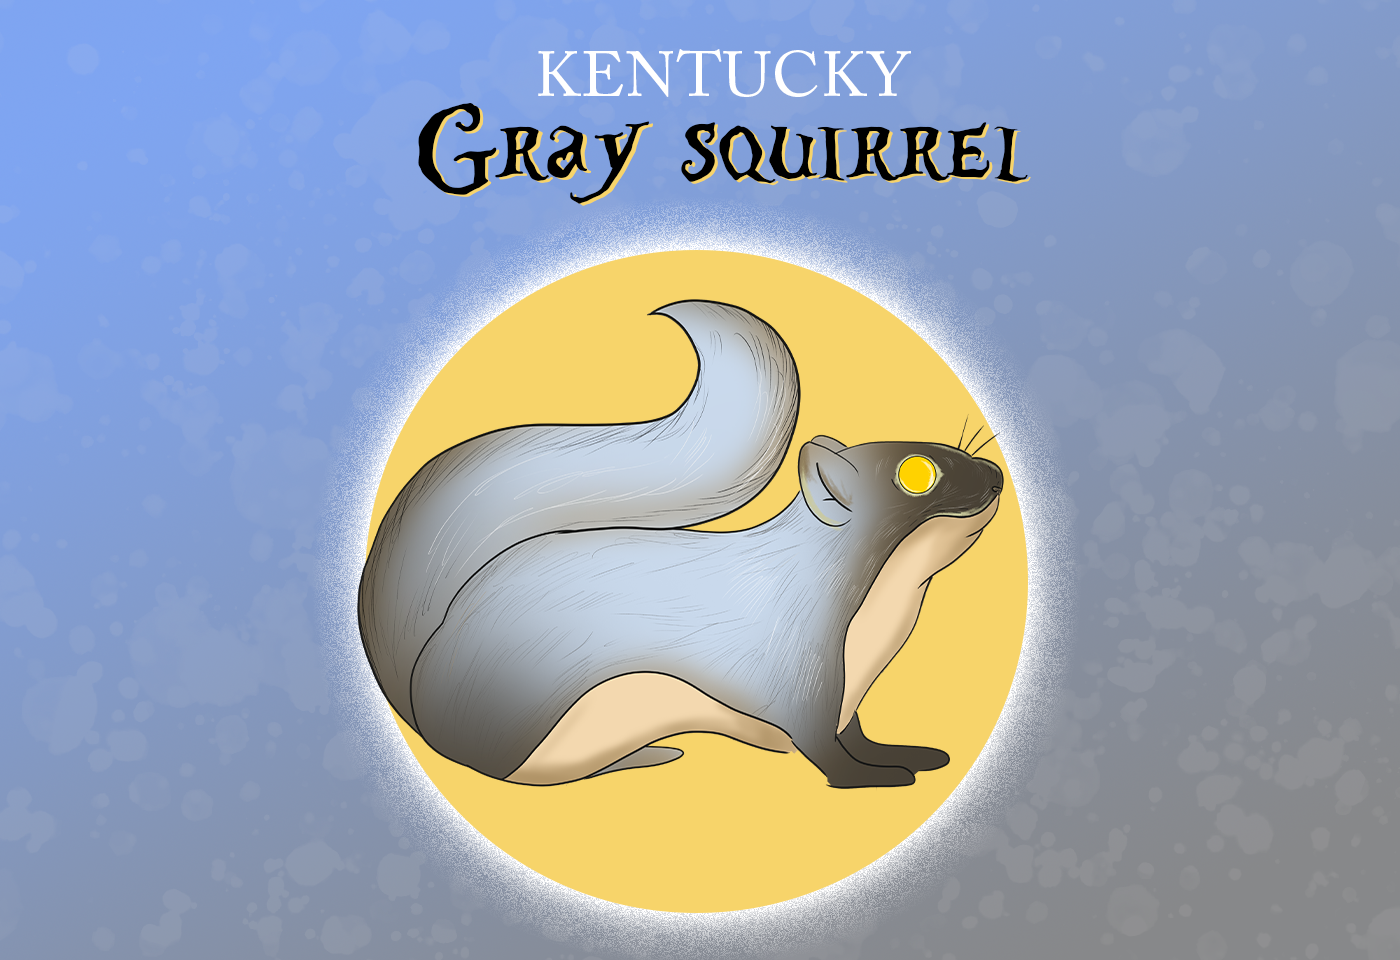 Gray Squirrel Kentucky State Wild Game Animal